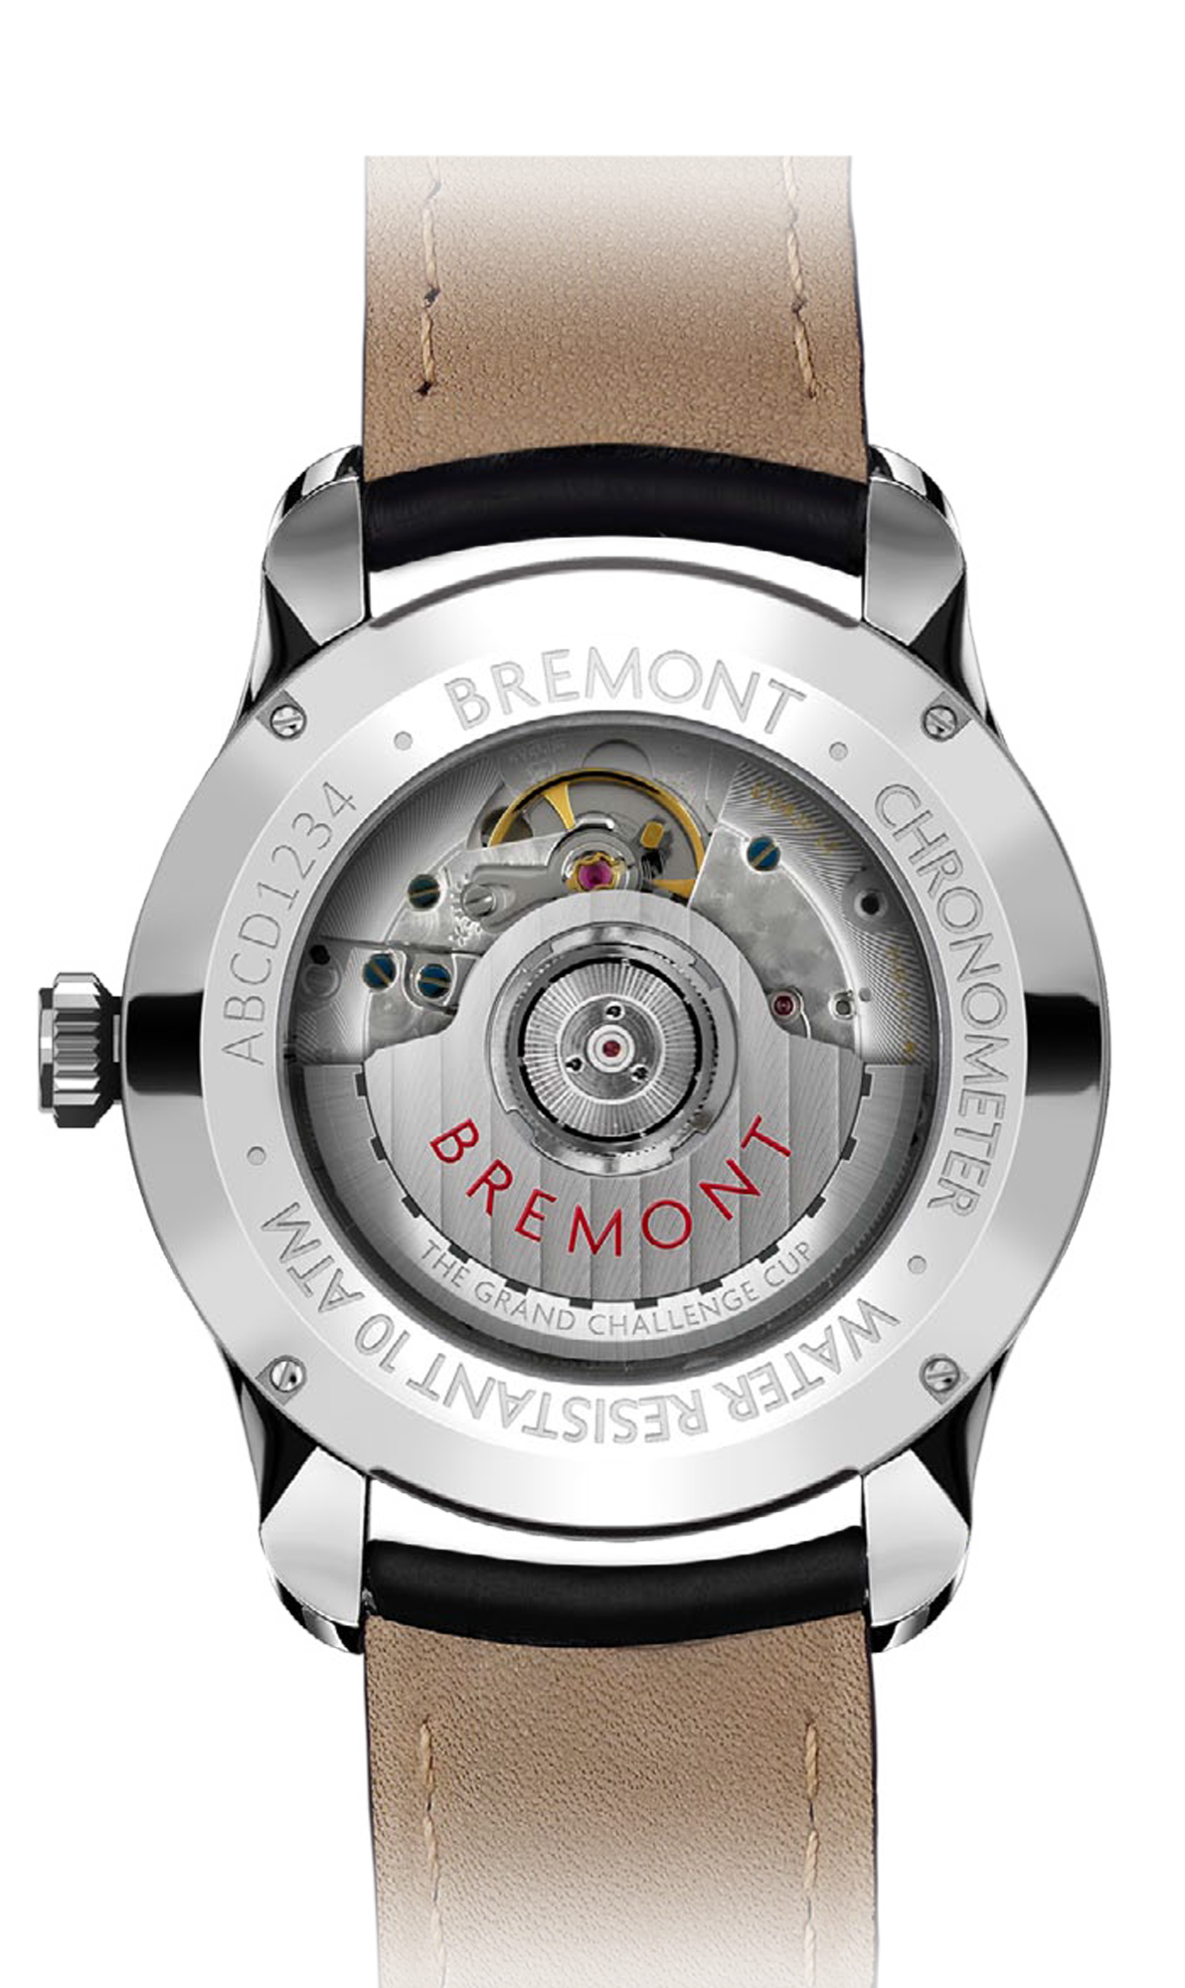 Special Edition Henley Royal Regatta Winner's Timepiece